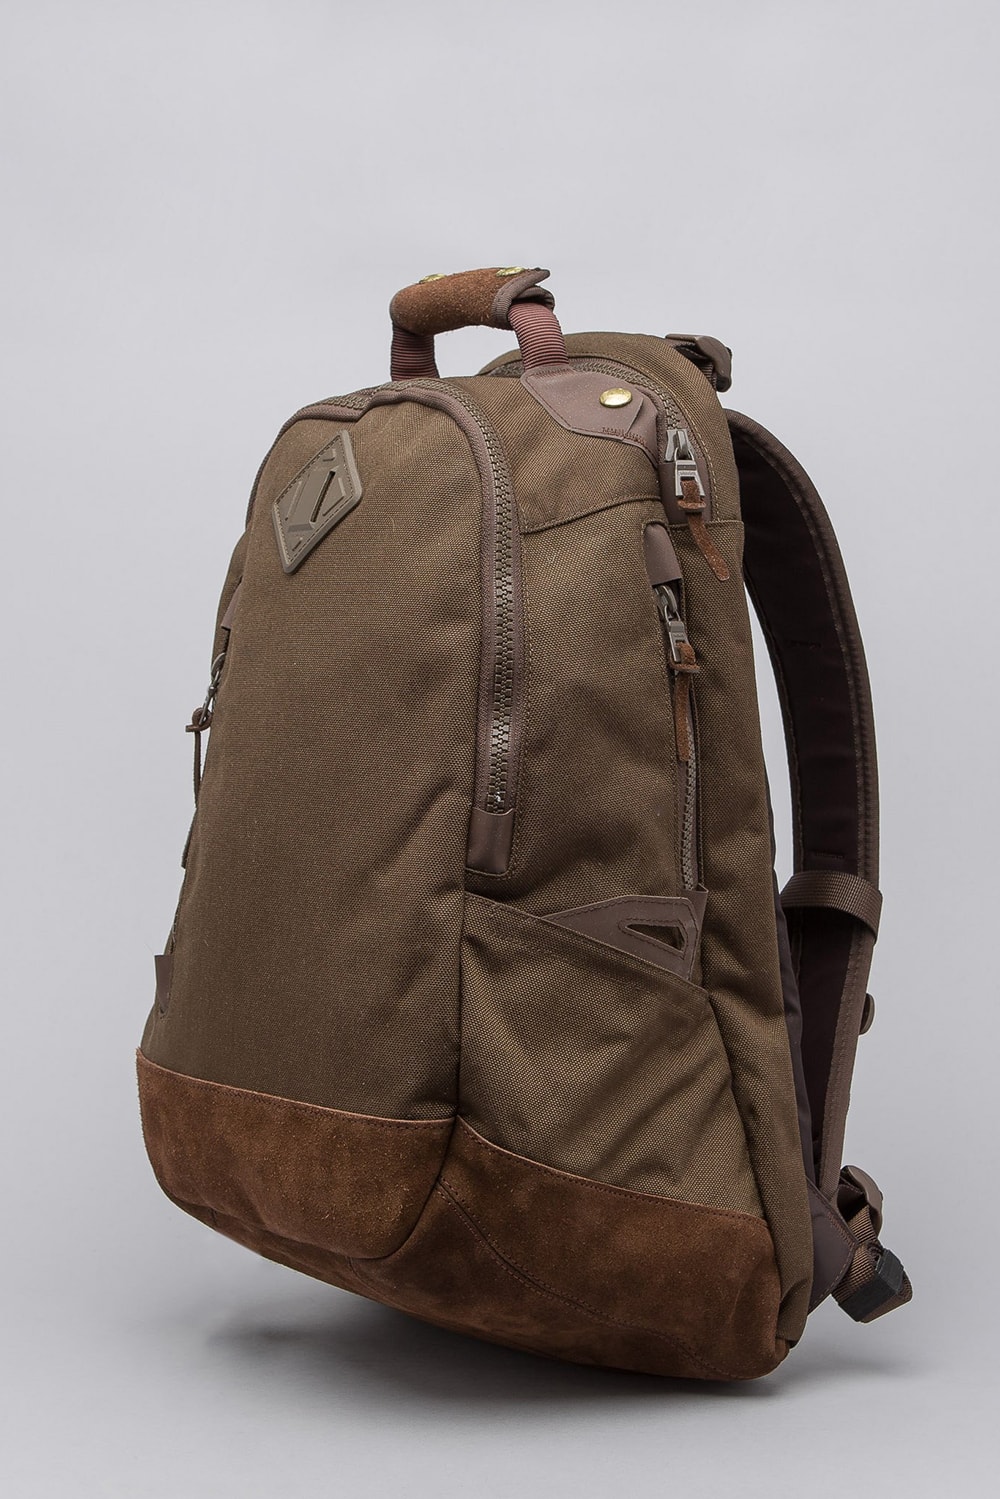 visvim Cordura Backpacks Black Brown Fall Winter 2017 Bags Accessories